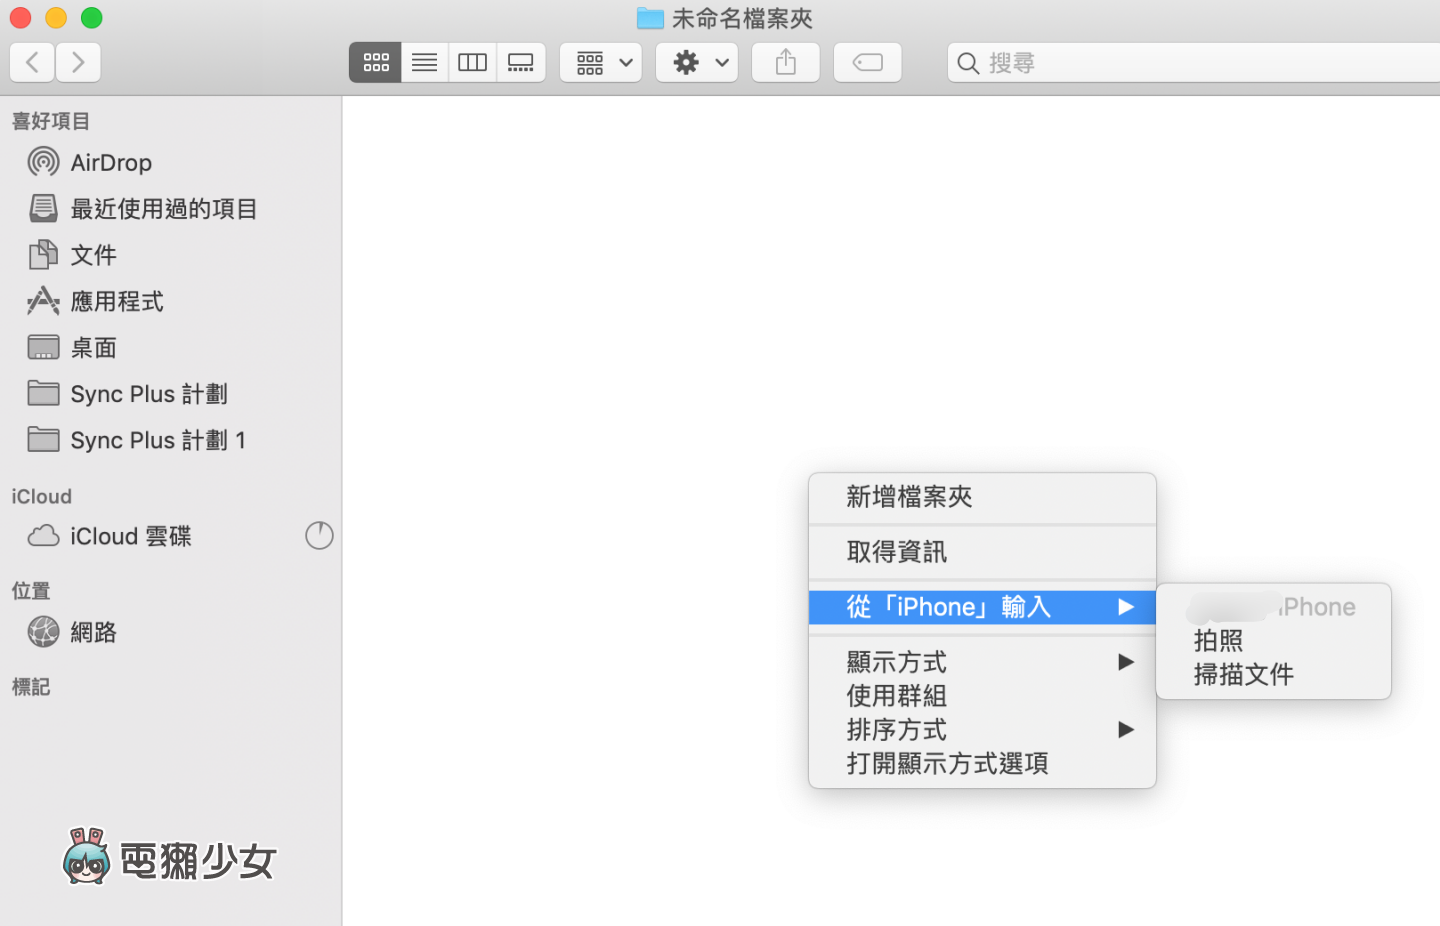 iPhone 拍照、掃描直接匯入 Mac！Airdrop 傳檔步驟都省下來！教你『 接續互通相機 』功能怎麼使用！